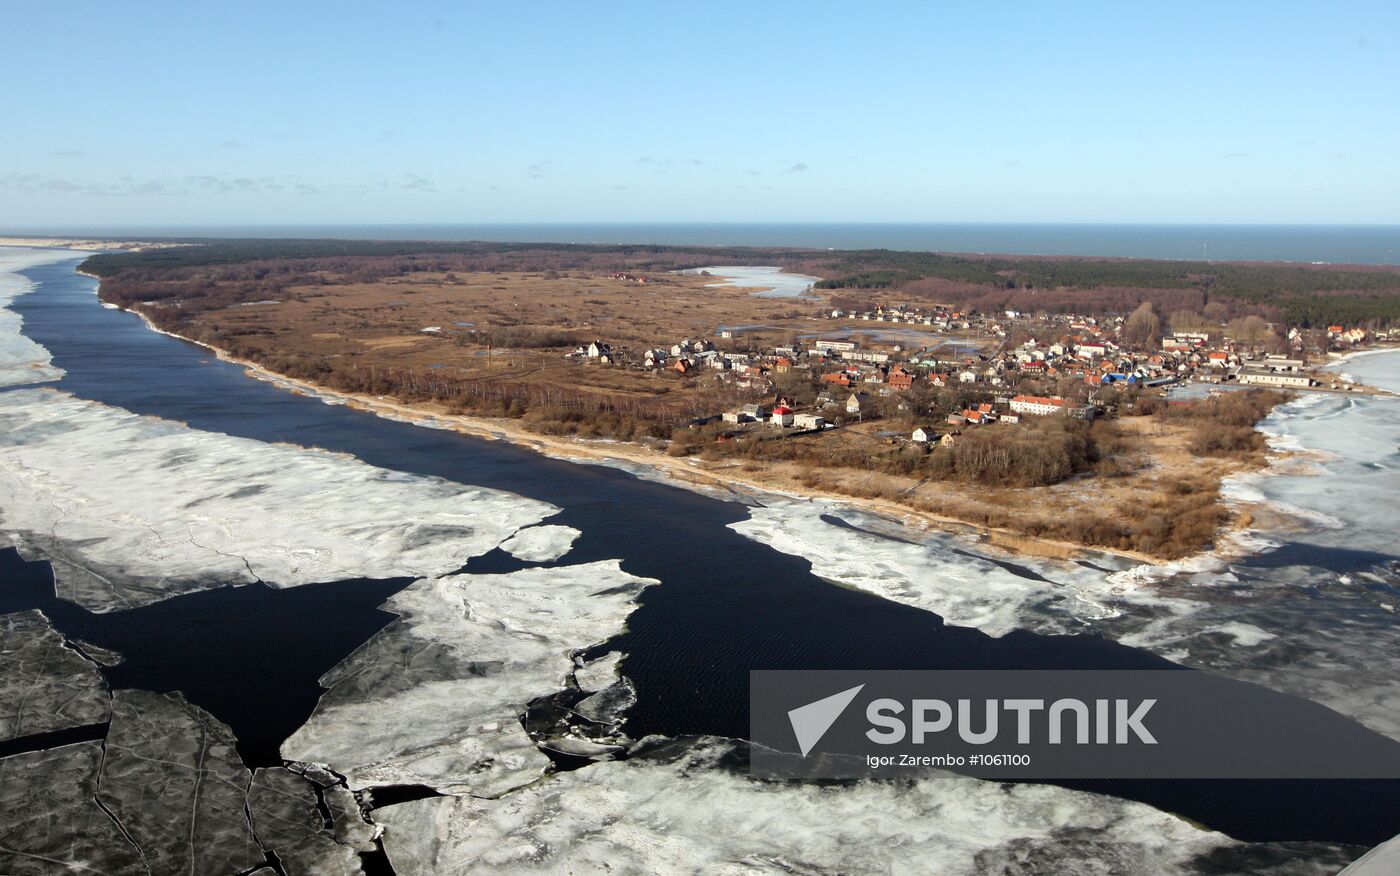 Views of Curonian Spit in the Kaliningrad region